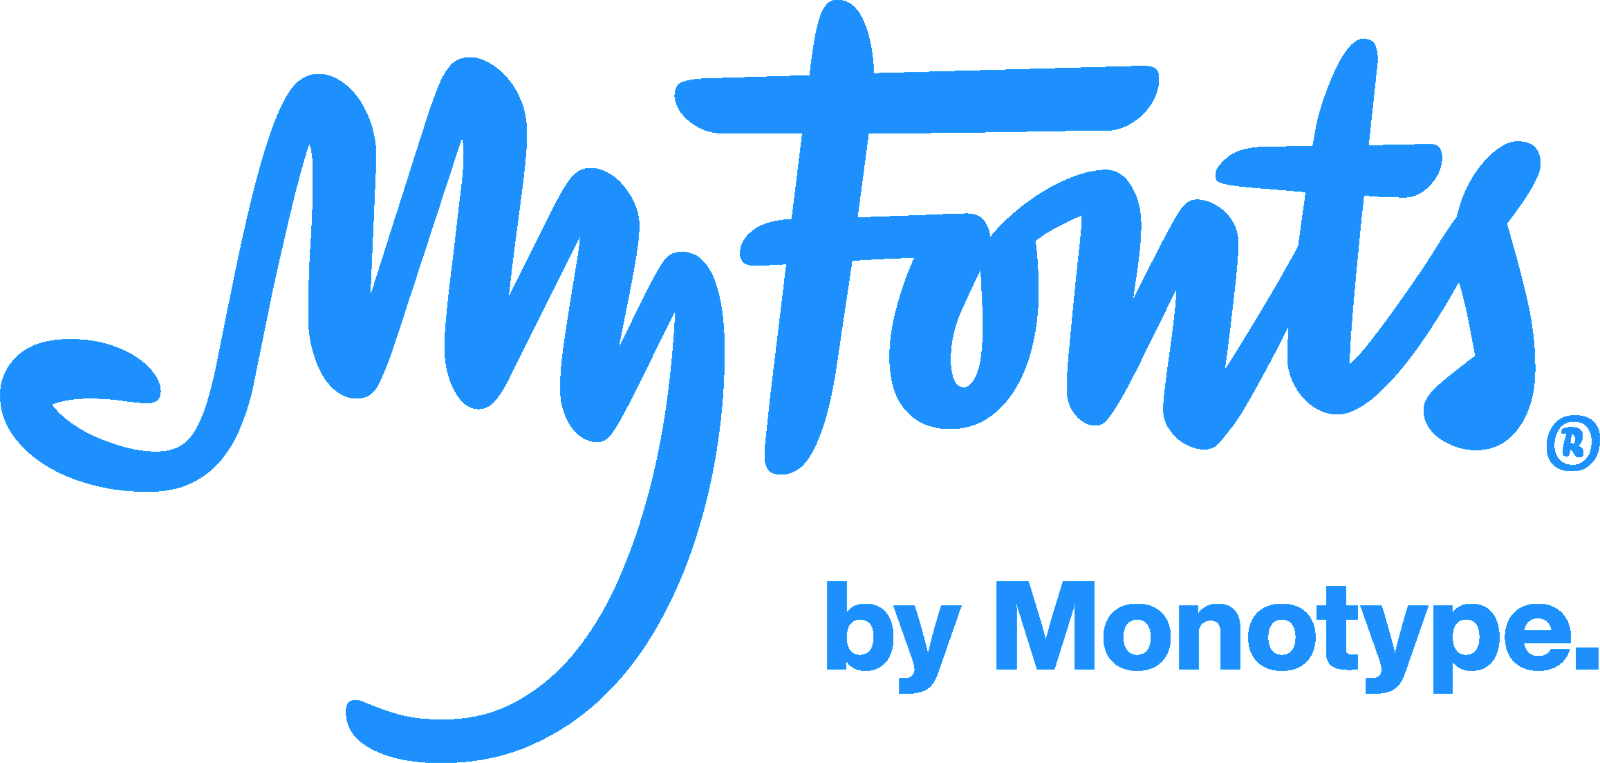 MyFonts.com